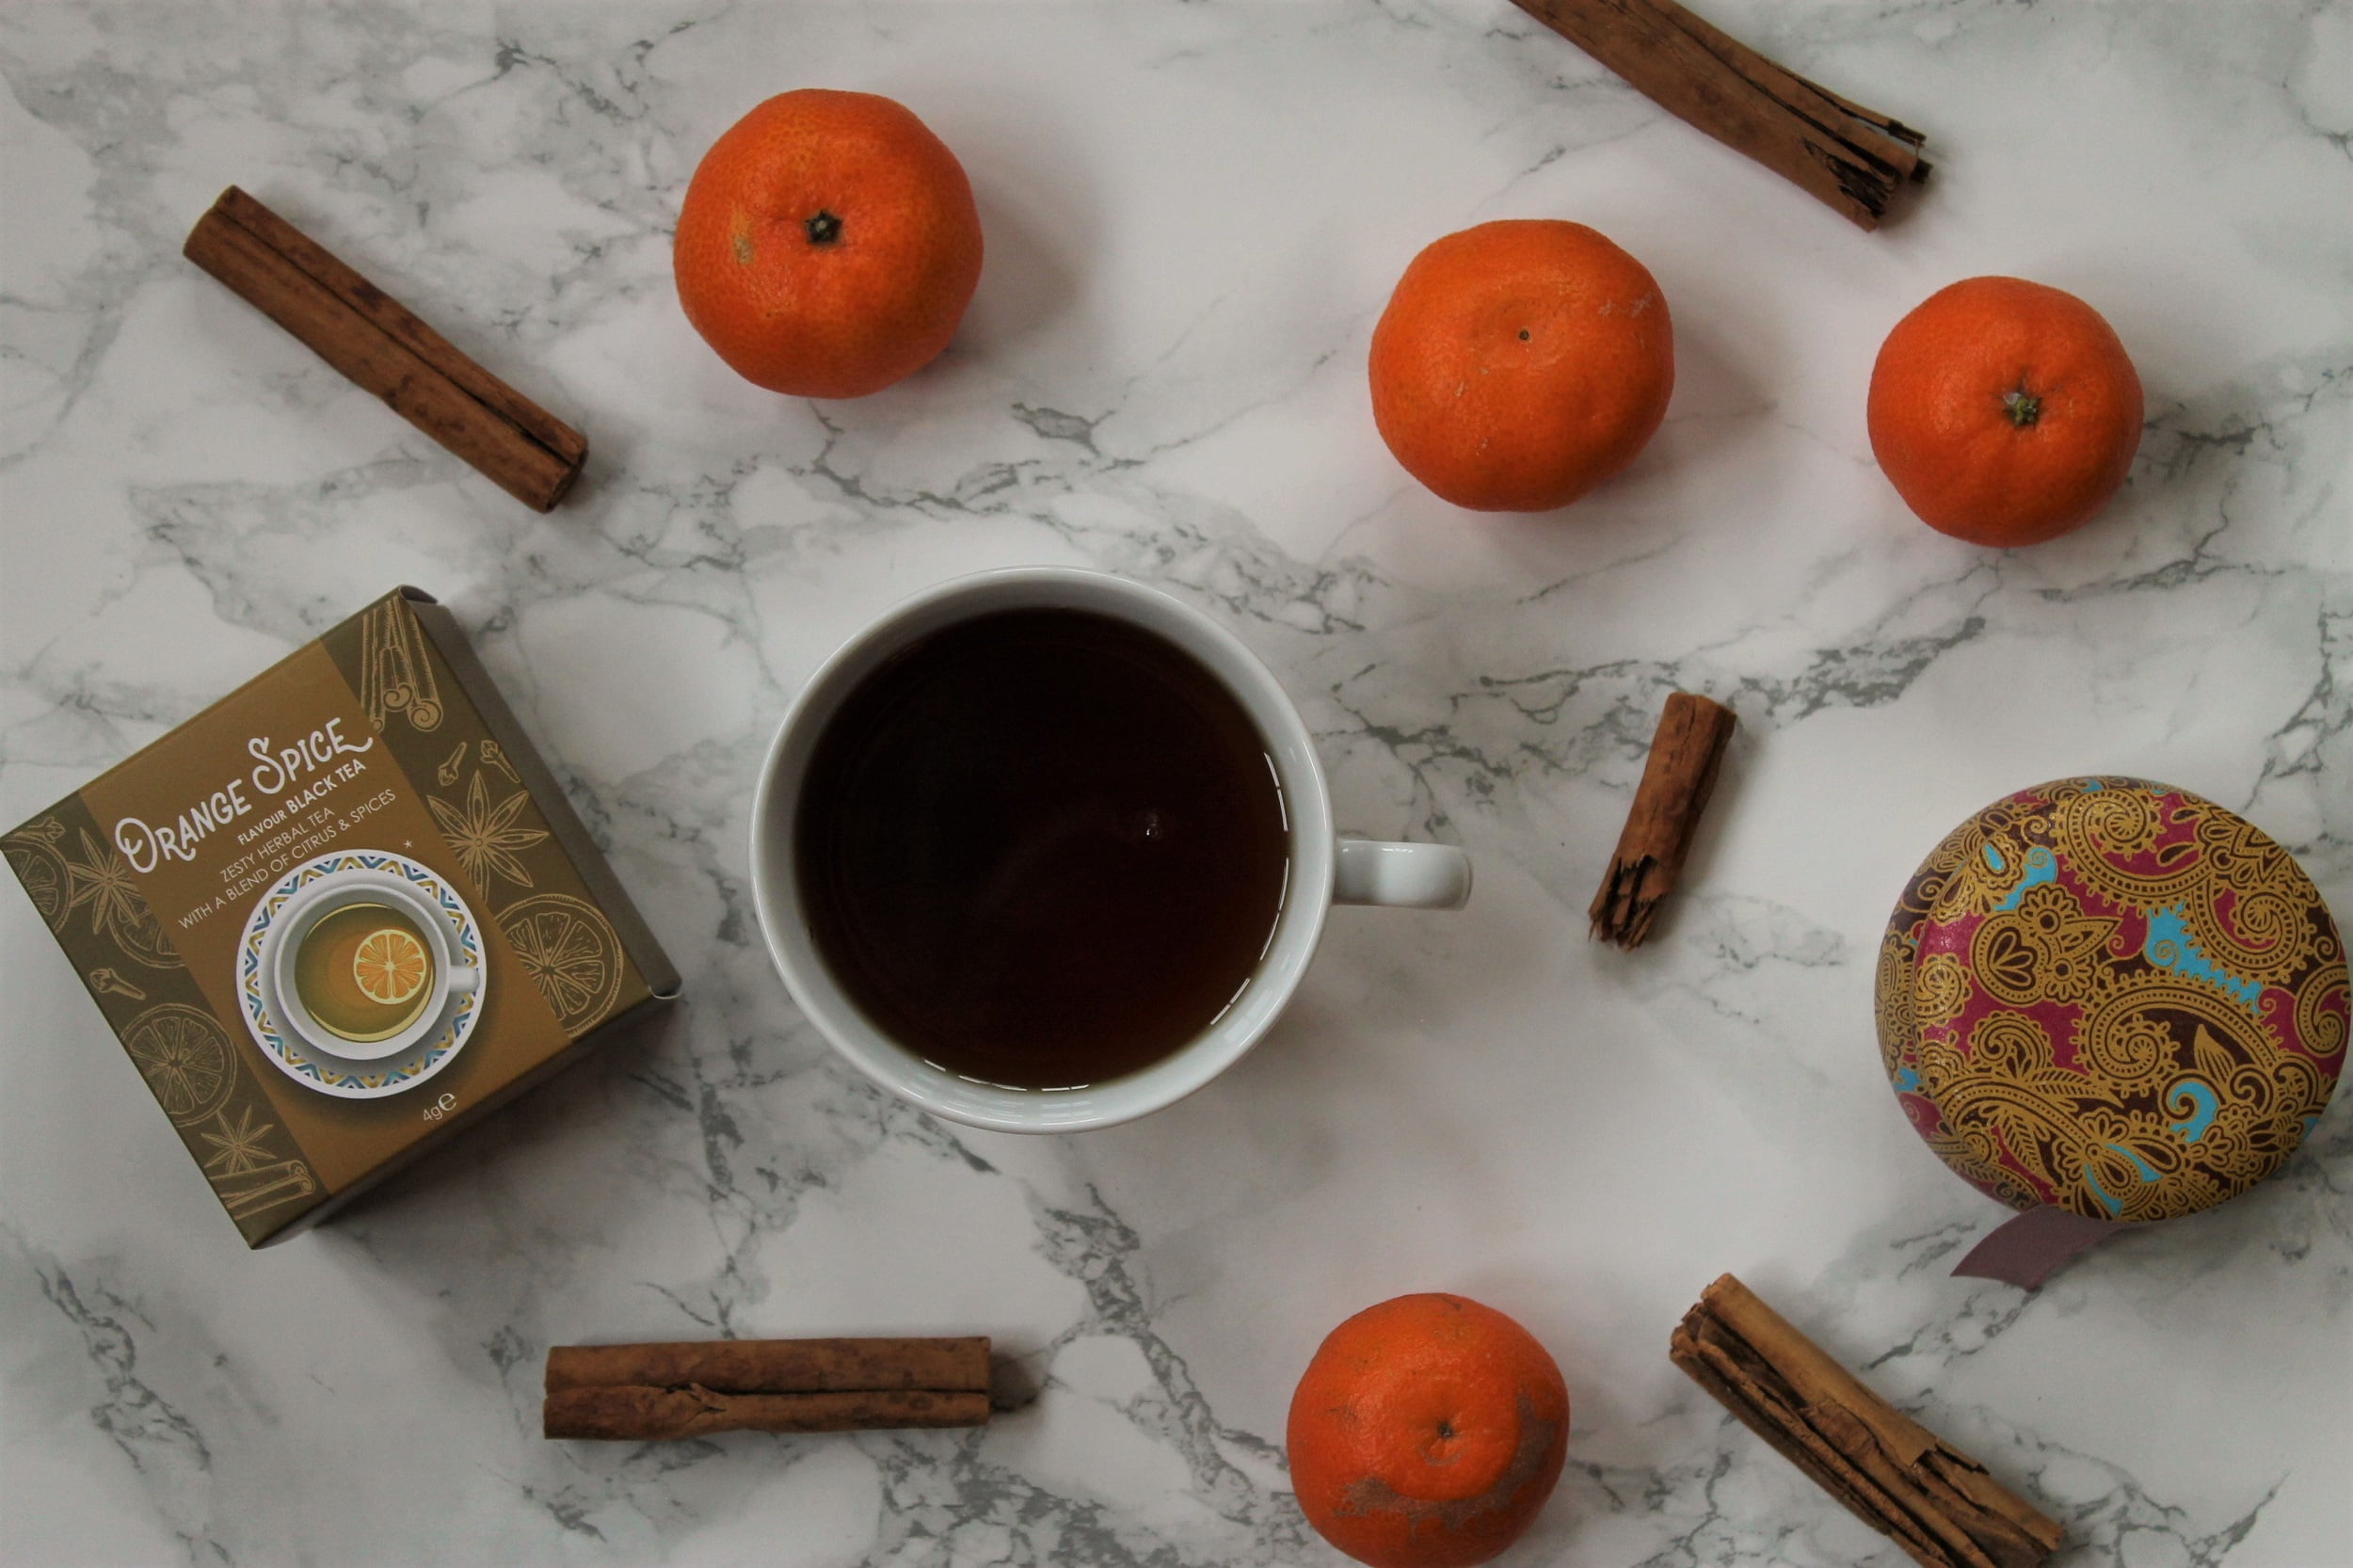 Fosters Orange Spice Tea Review